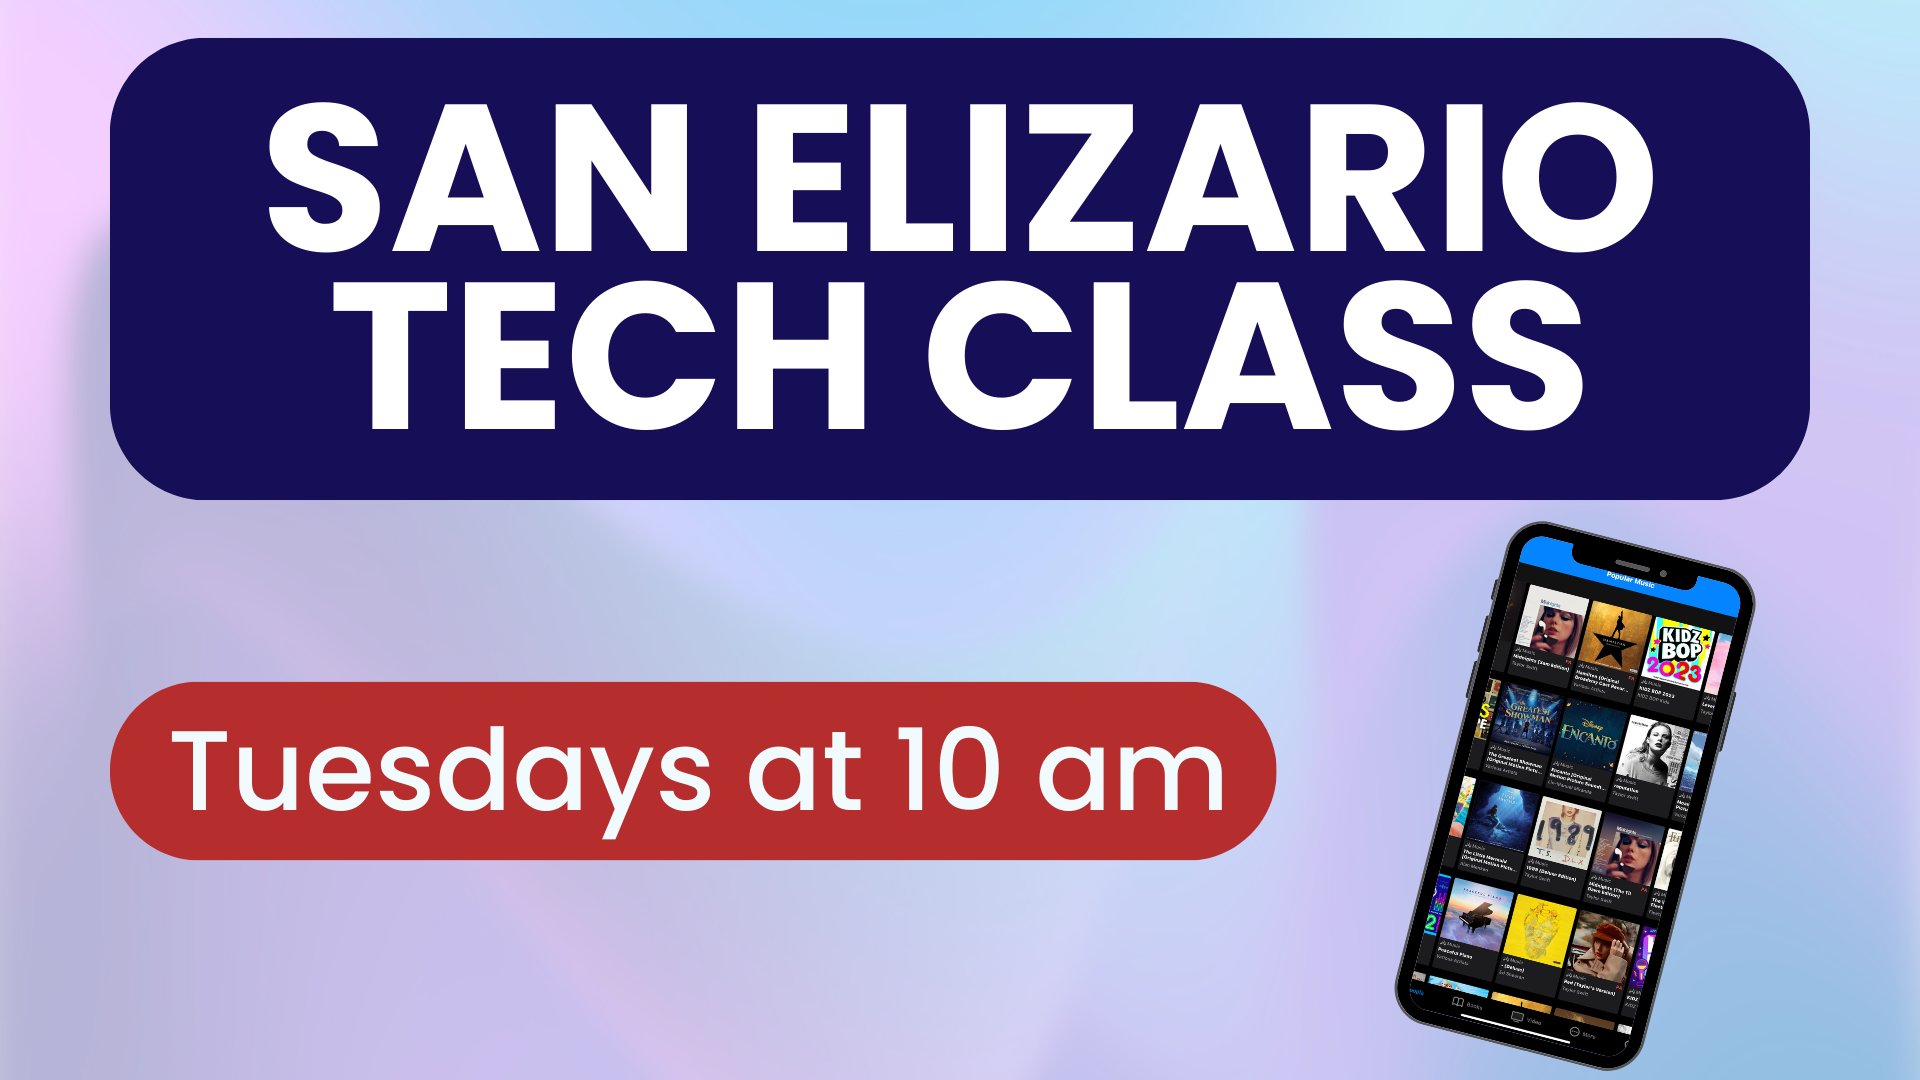 Library program flyer promoting a beginner technology class in San Elizario, Texas.